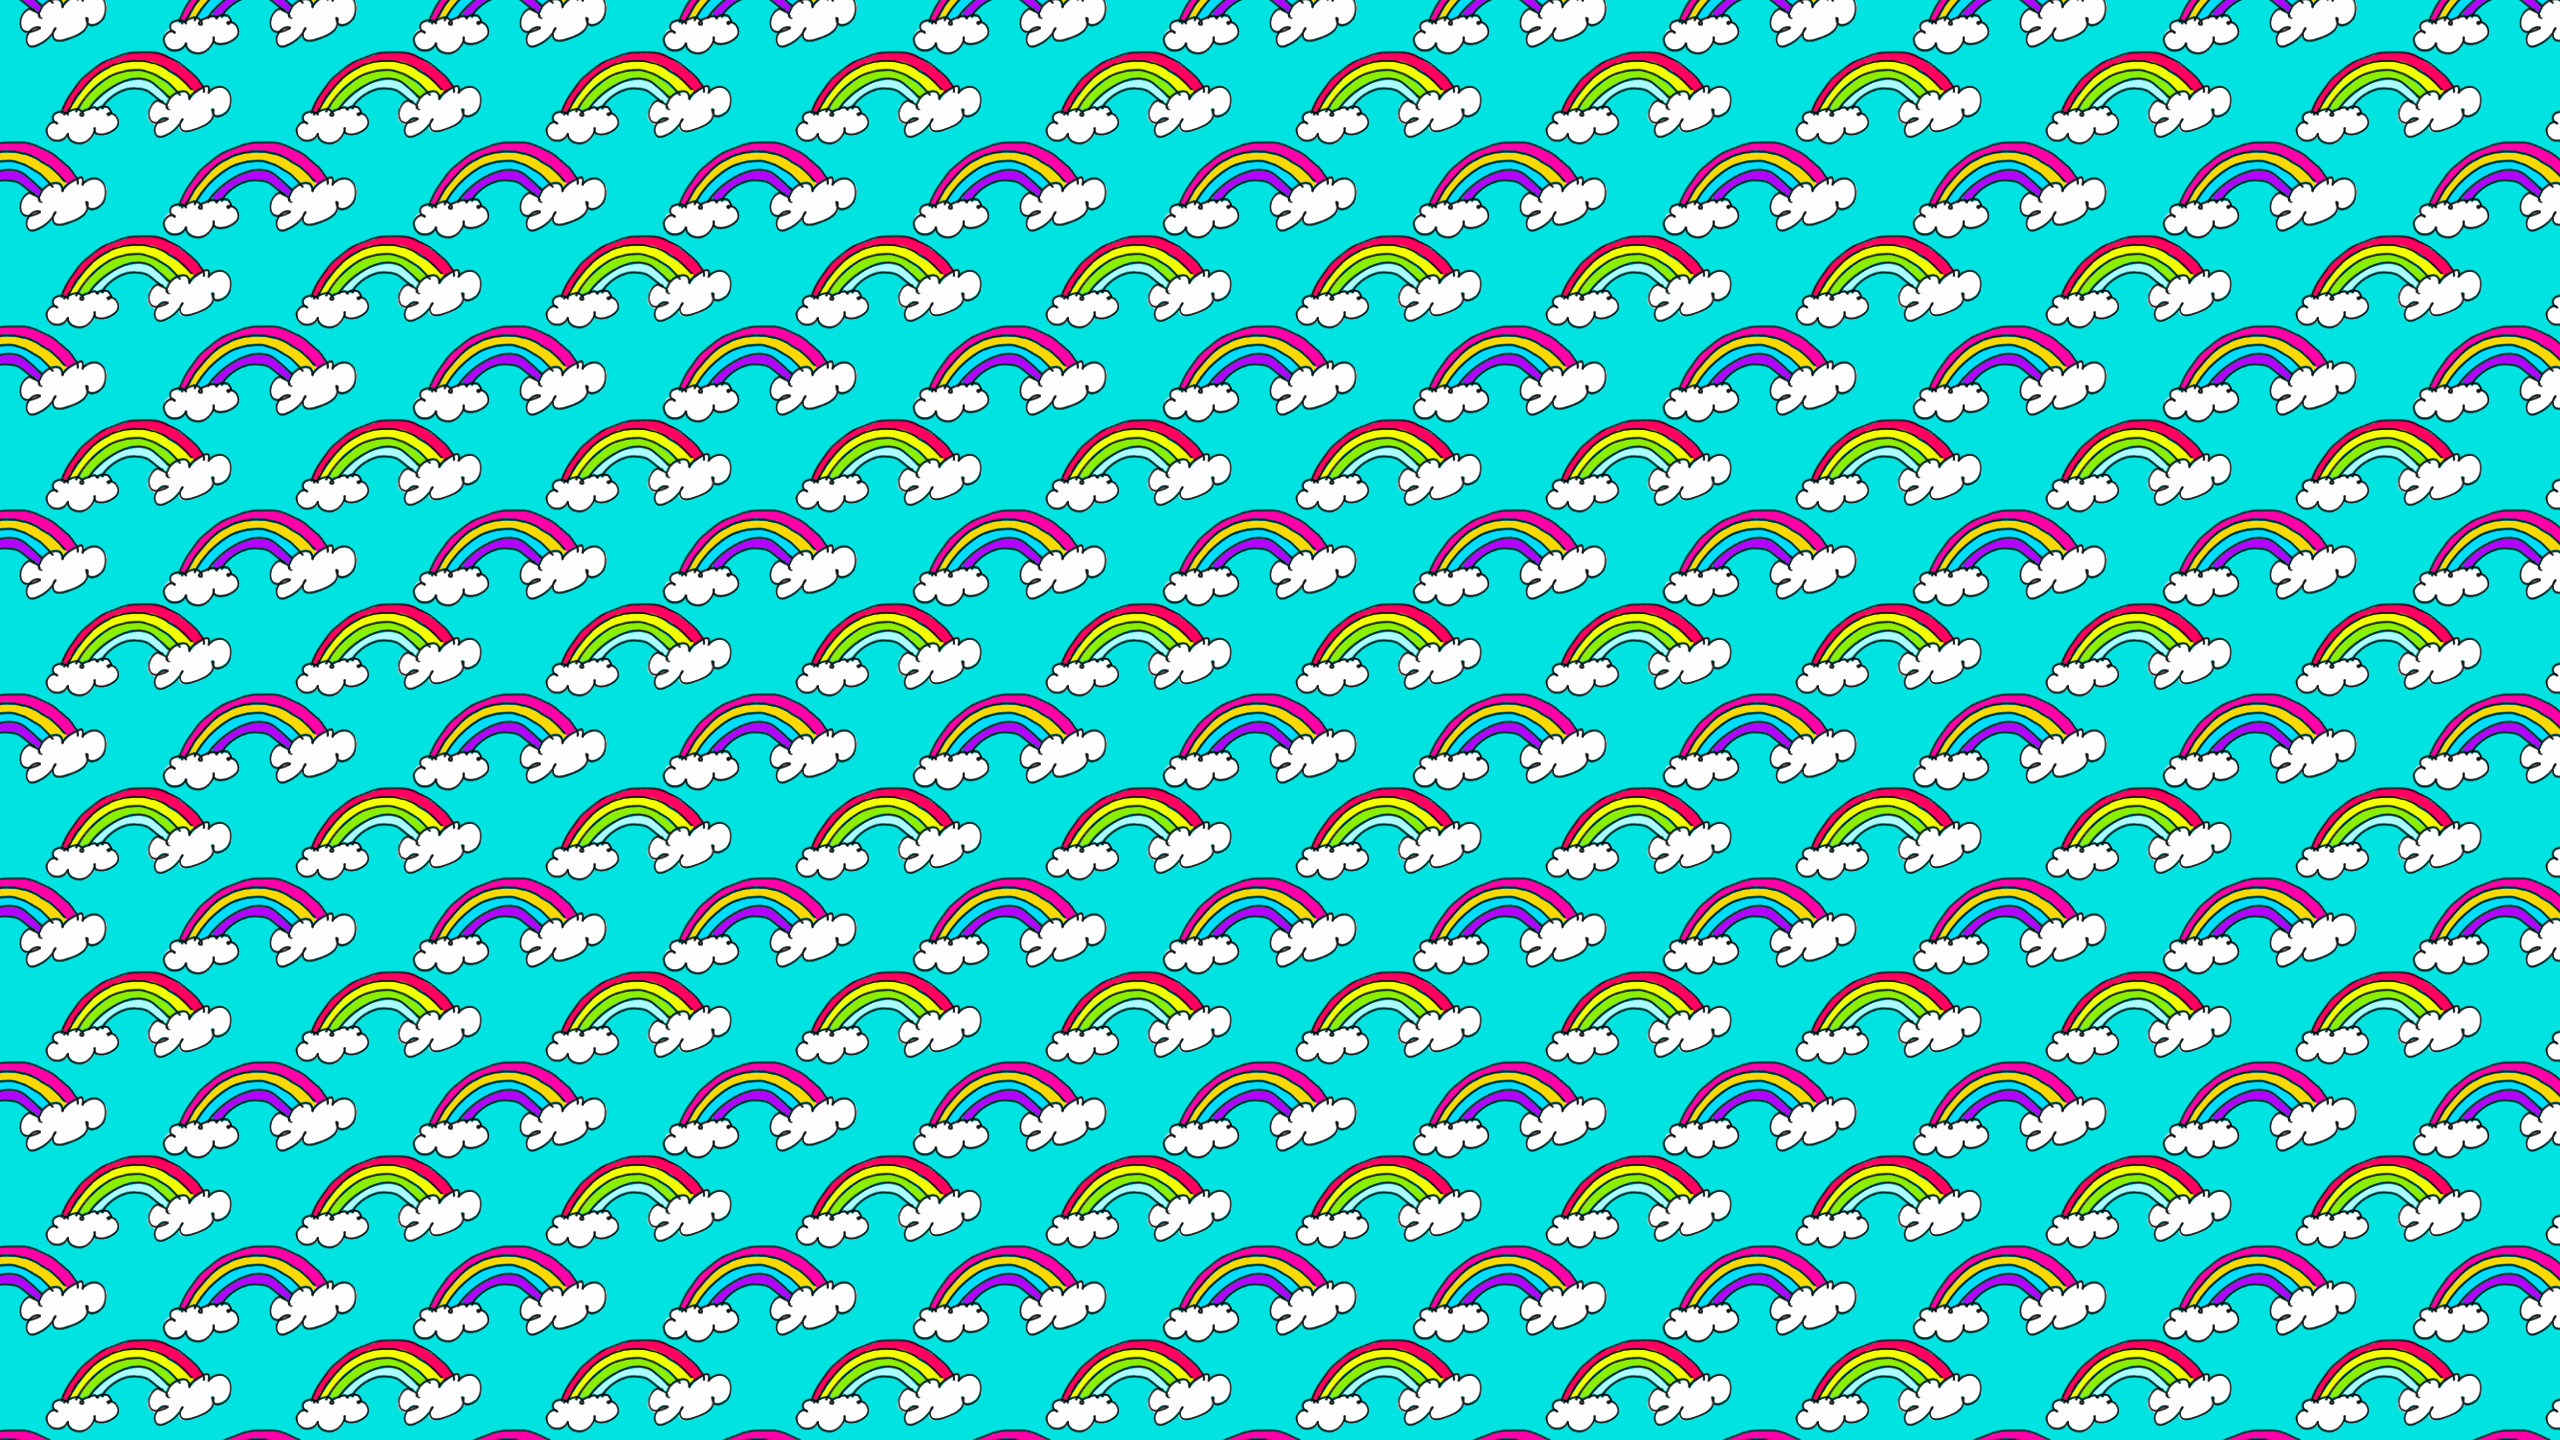 2560x1440 Cute rainbows background wallpaper desktop wallpapers - 1078299